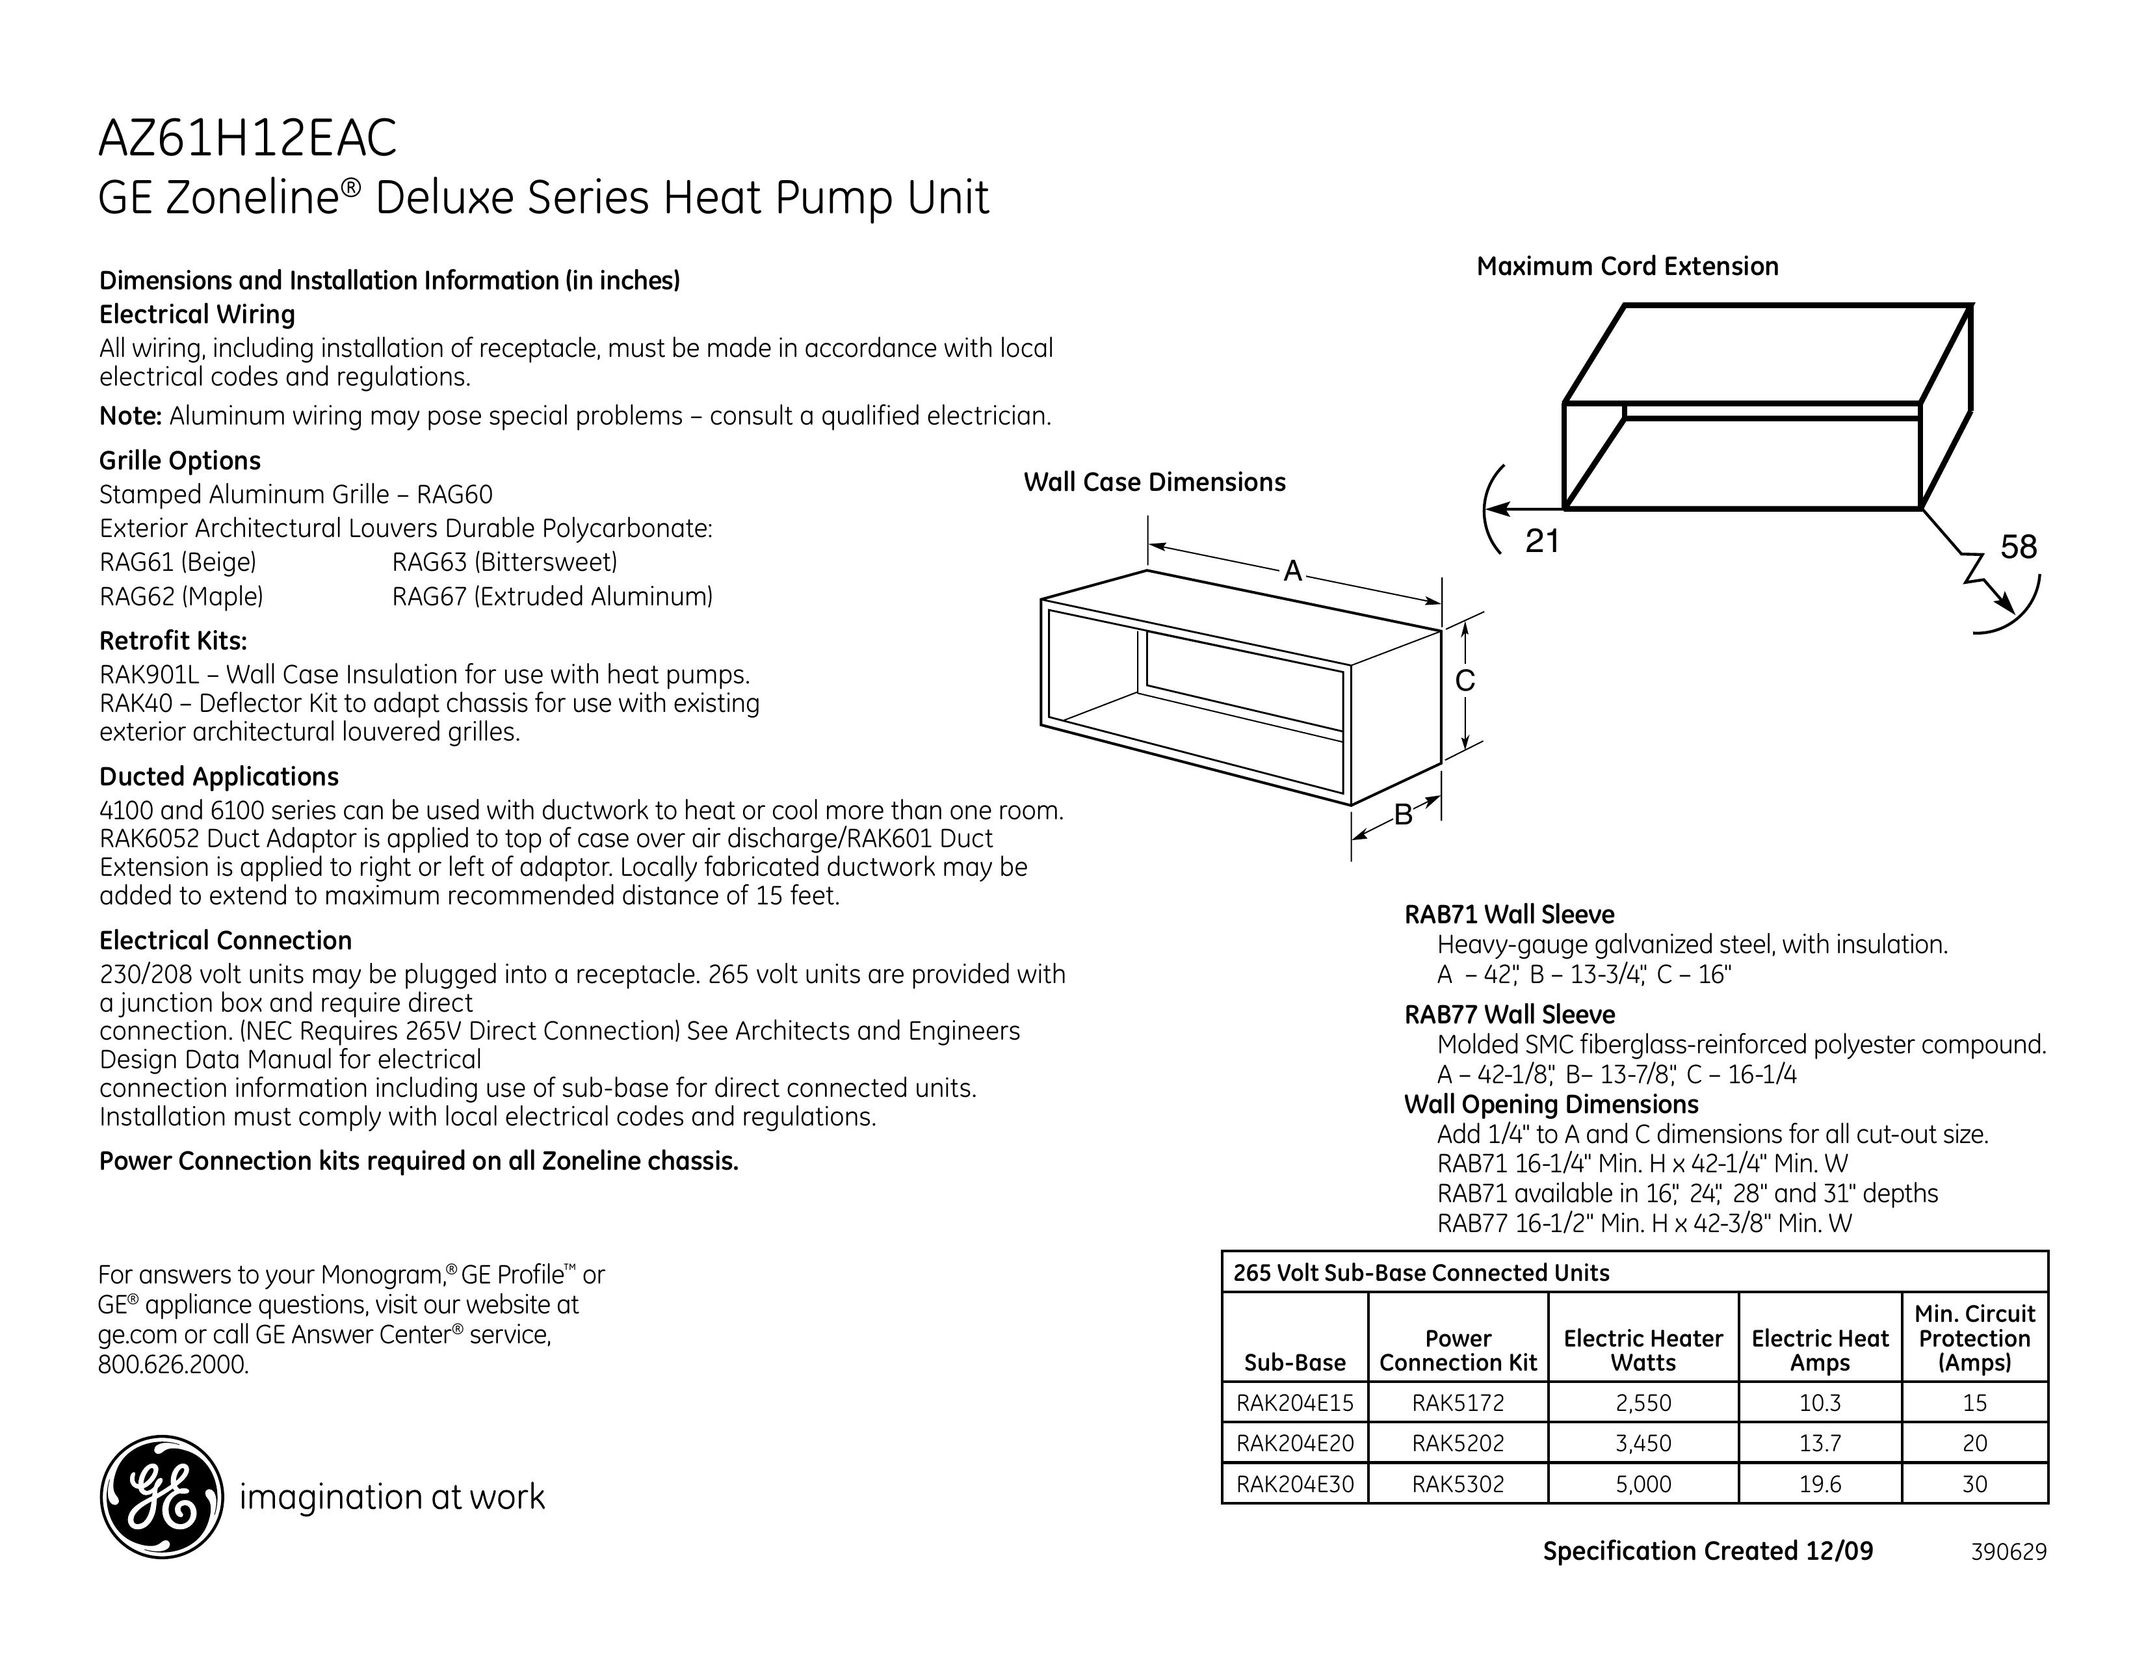 GE AZ61H12EAC Heat Pump User Manual